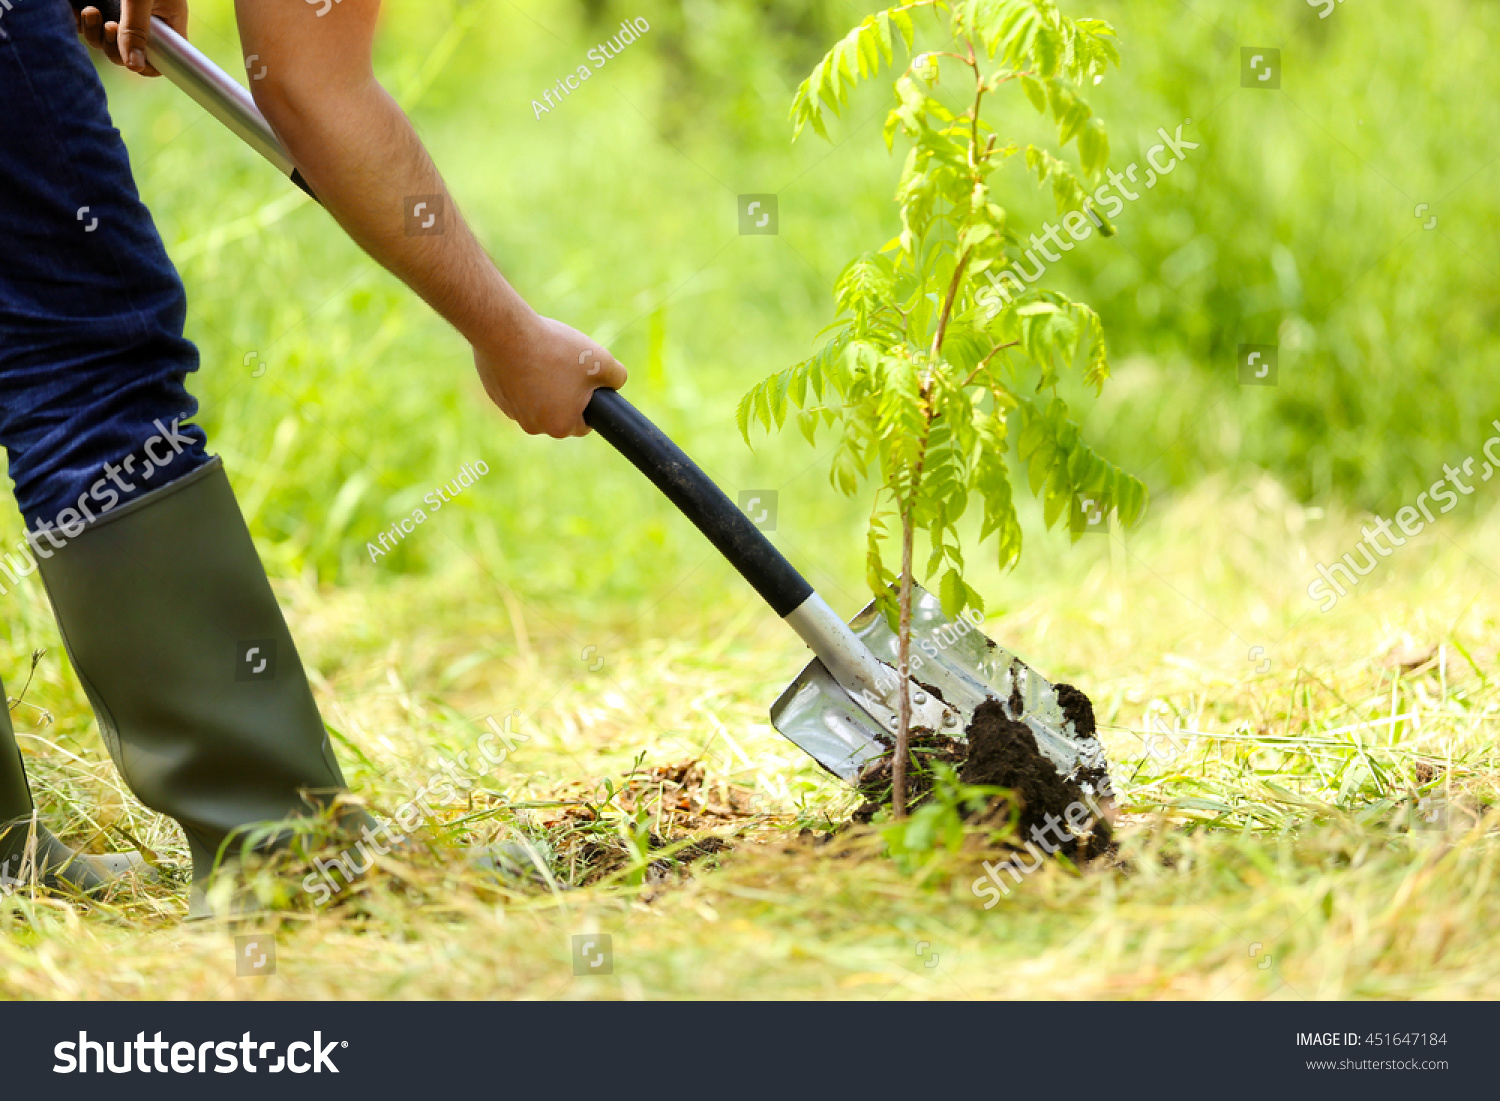 Man Planting Tree In Garden Stock Photo 451647184 : Shutterstock